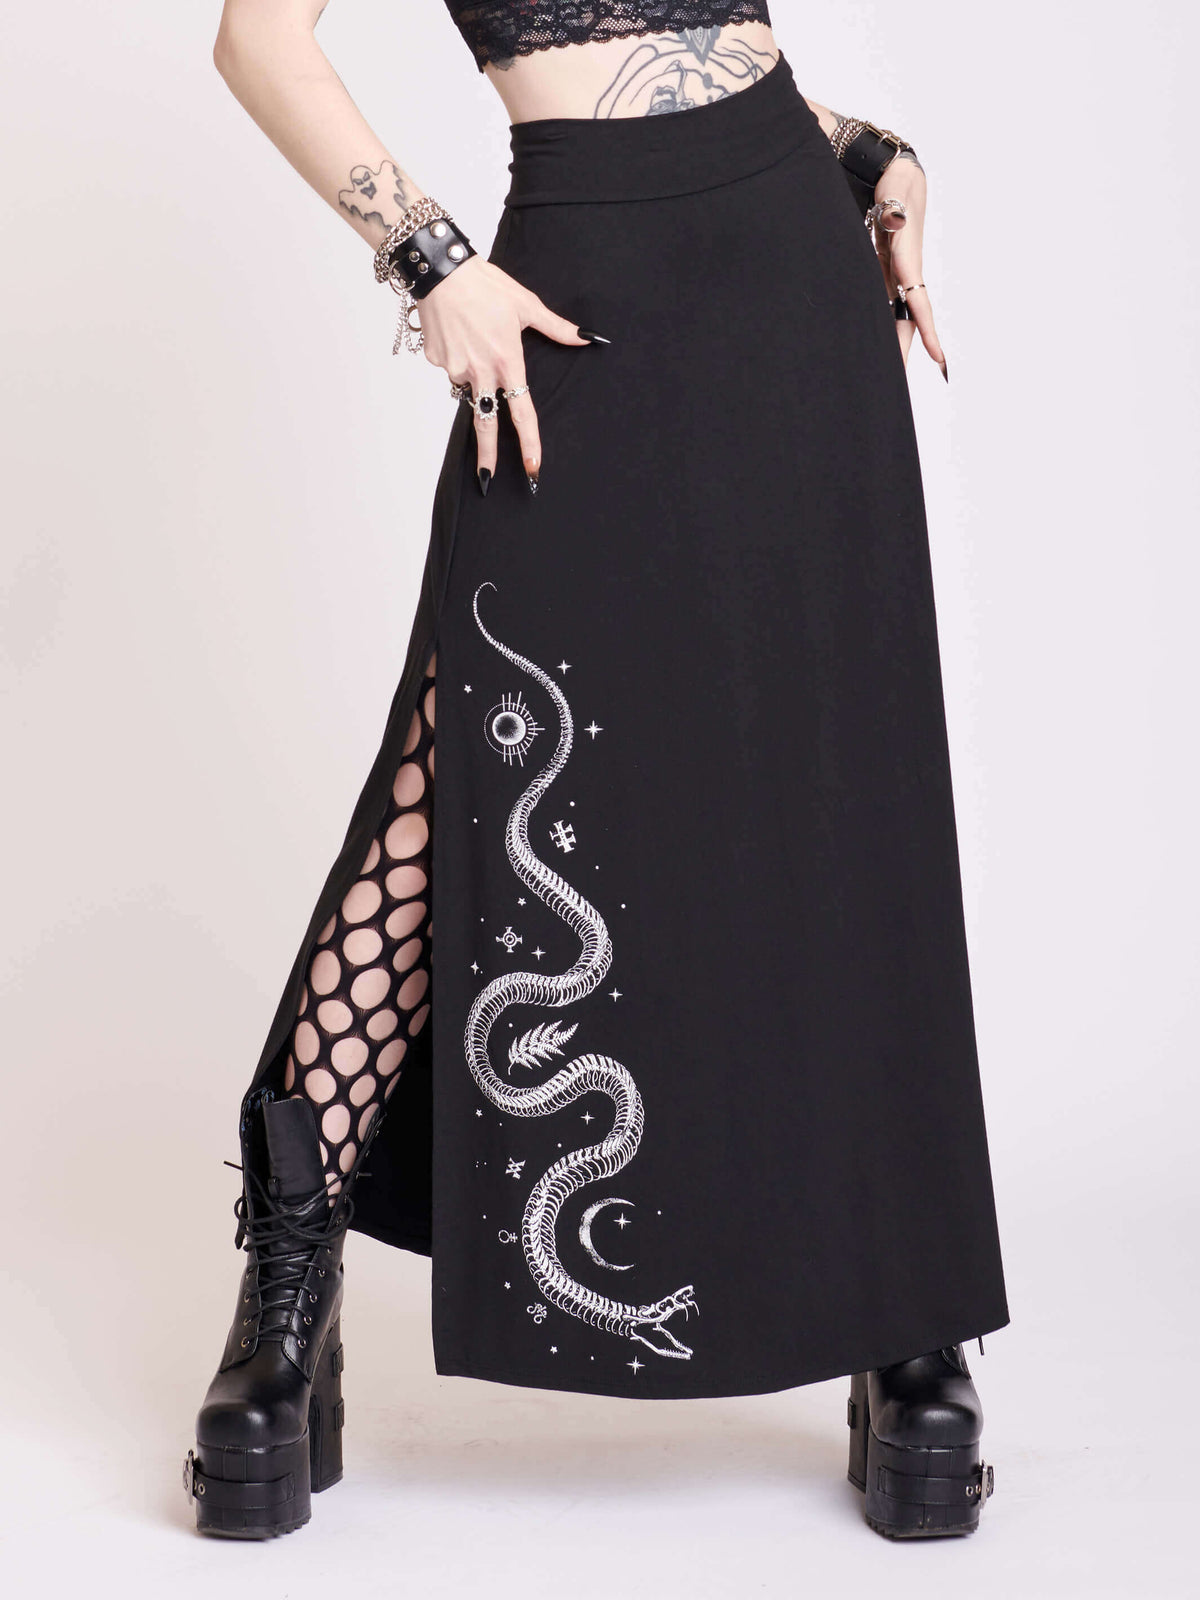 Black skirt with side split and skeleton snake graphic